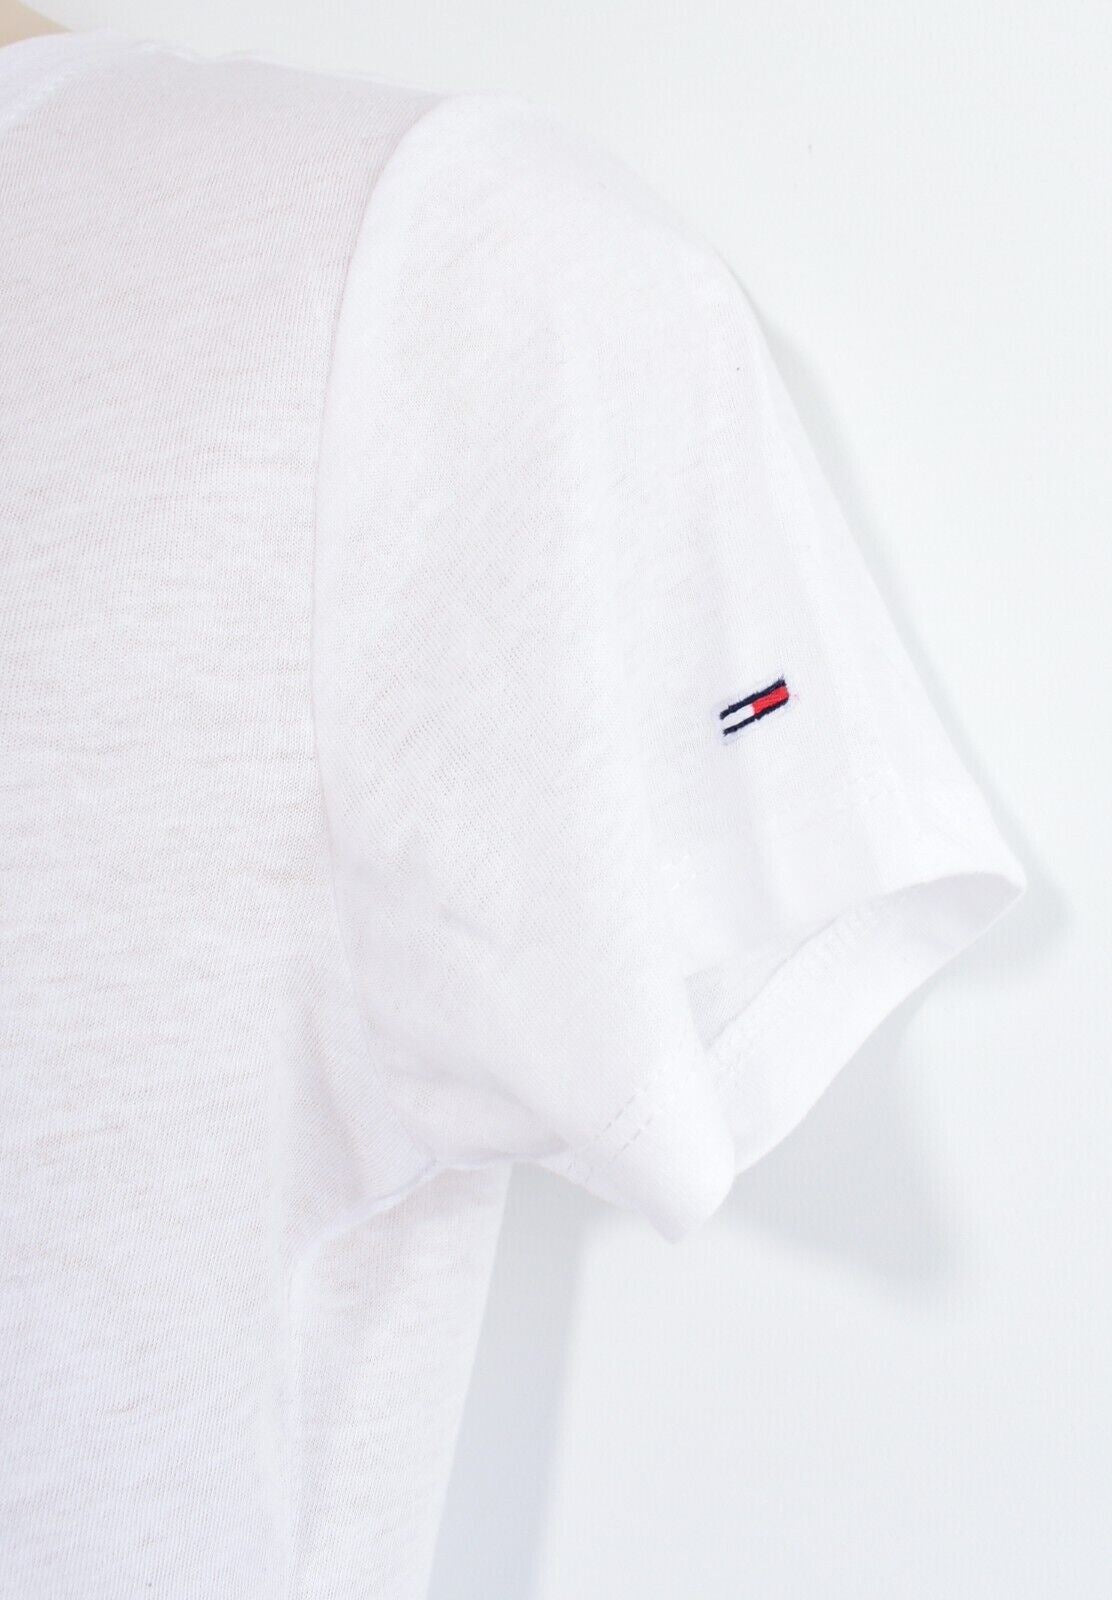 TOMMY HILFIGER - TOMMY JEANS Women's Slim Fit T-shirt, White, size S /UK 10